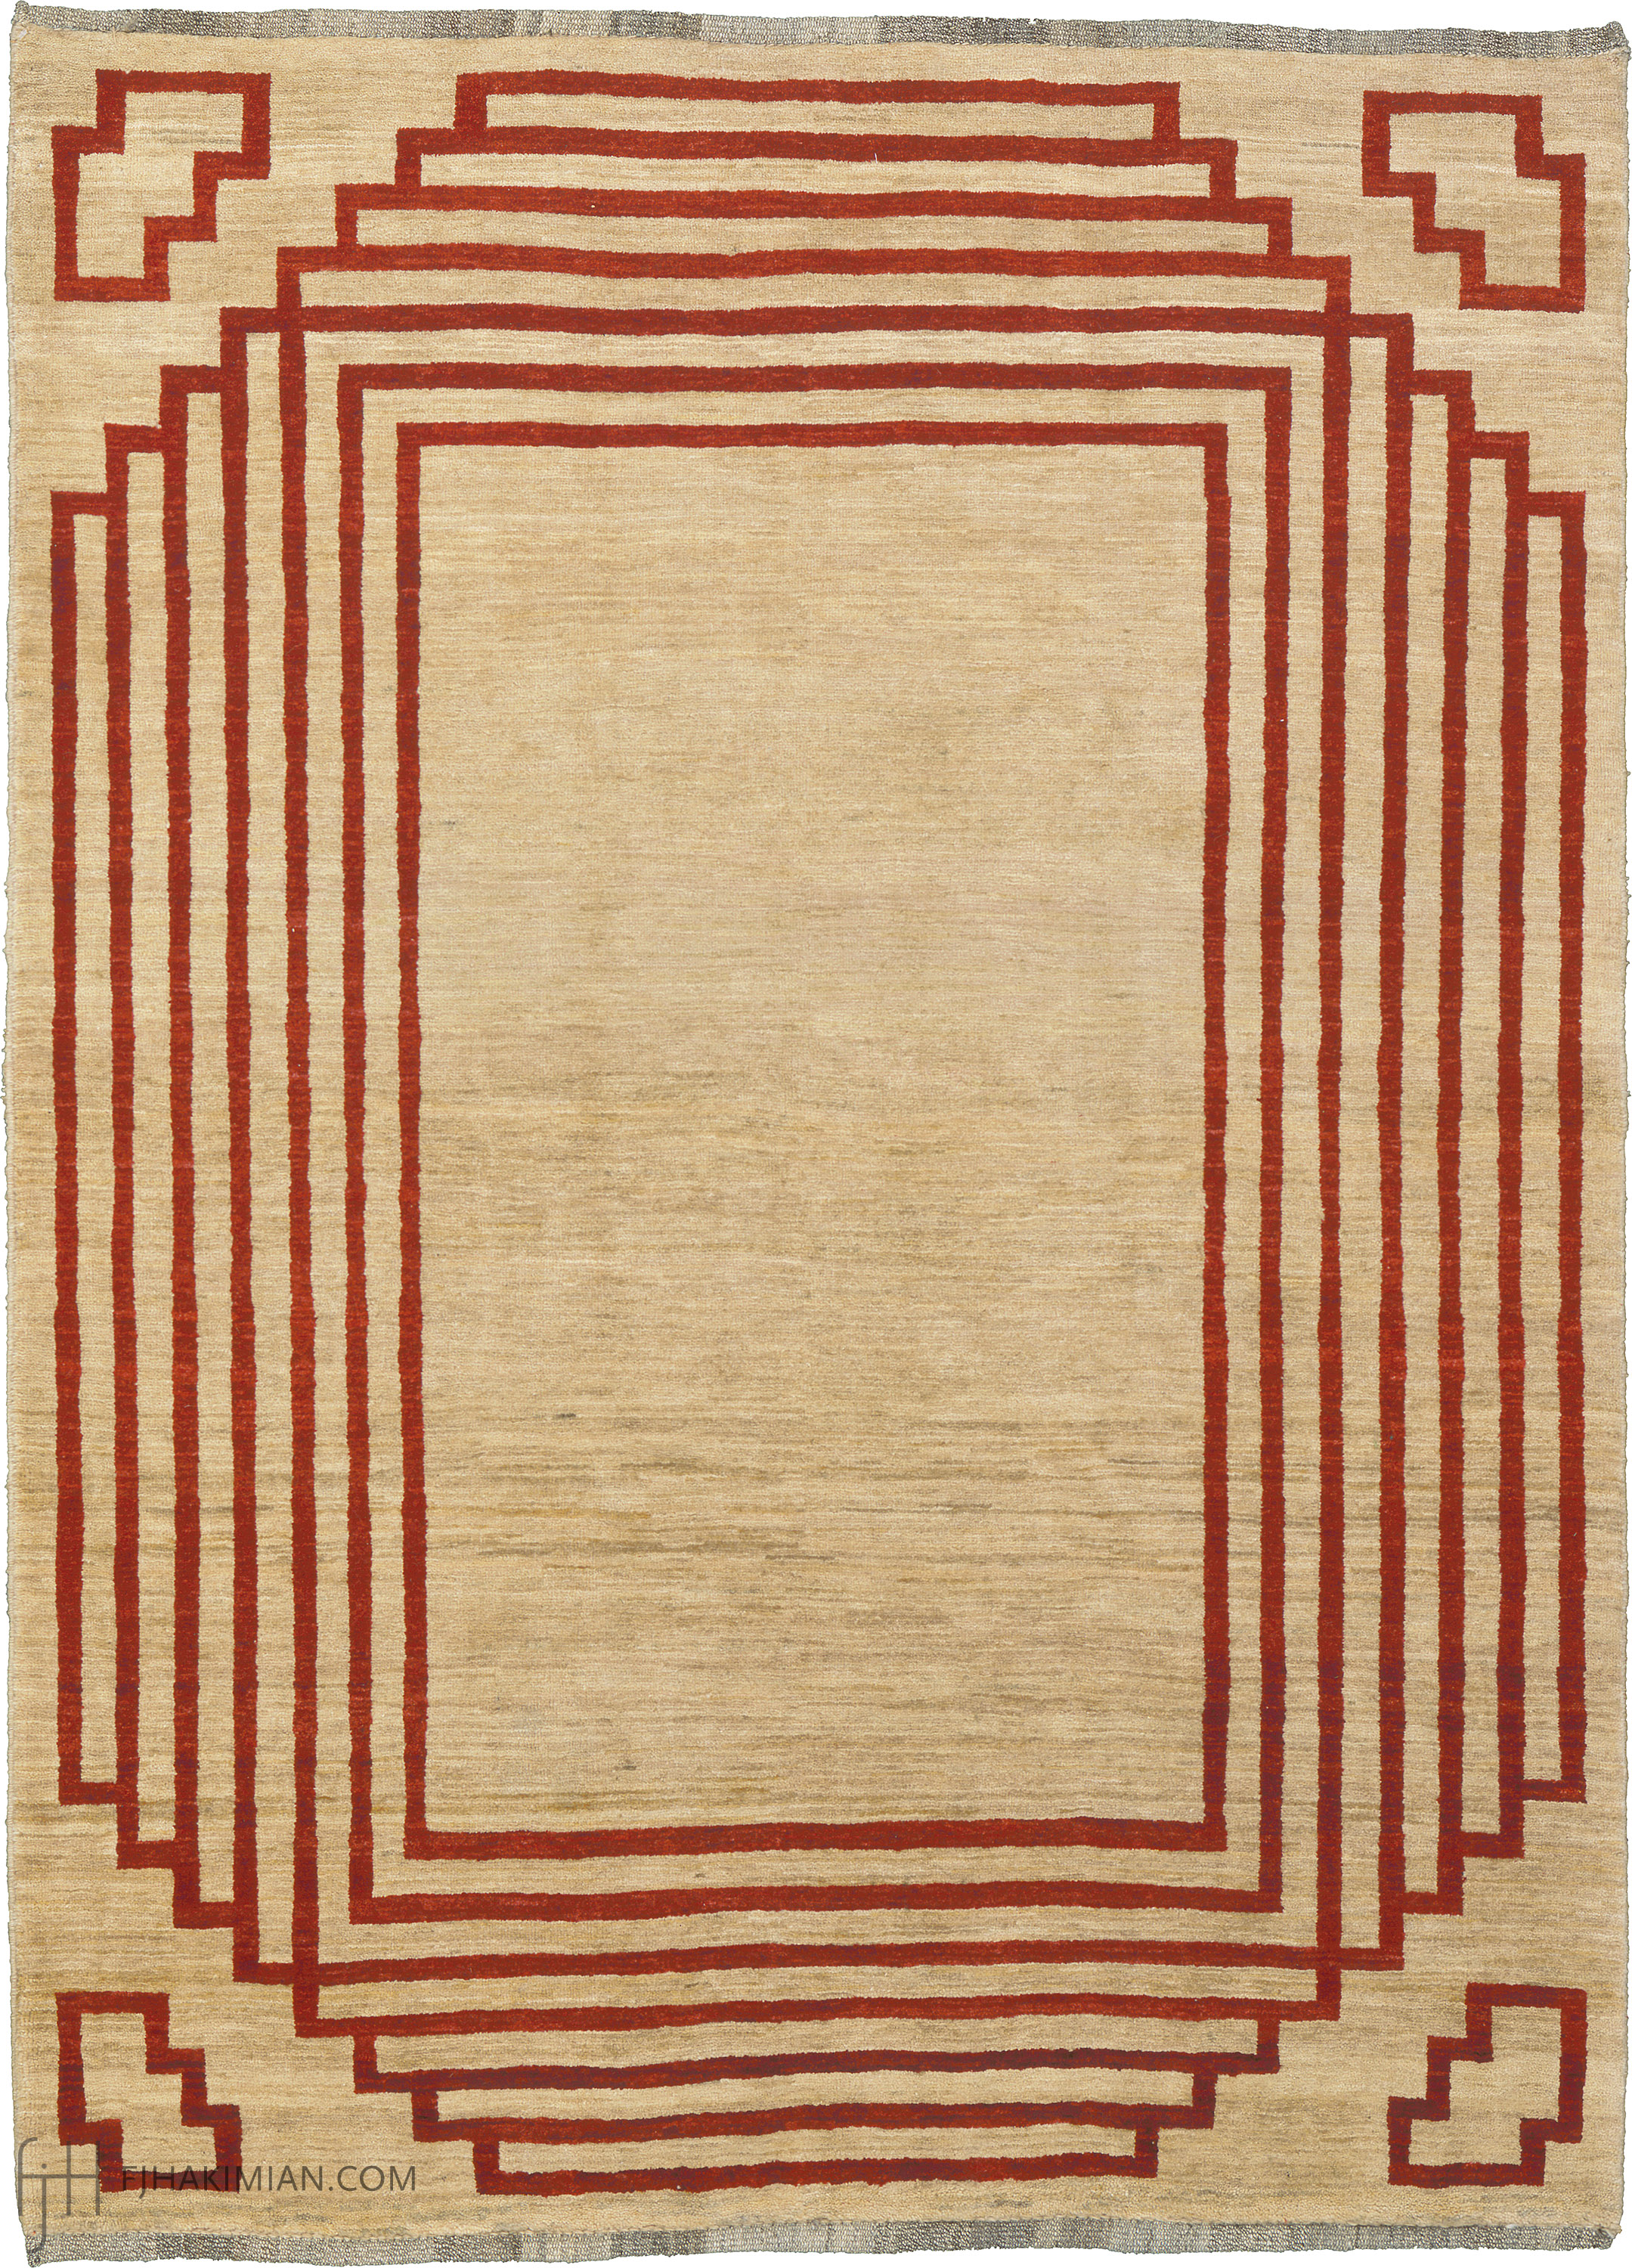 16230 Deco Border Design | Custom Modern & 20th Century Design Carpet | FJ Hakimian | Carpet Gallery in NYC